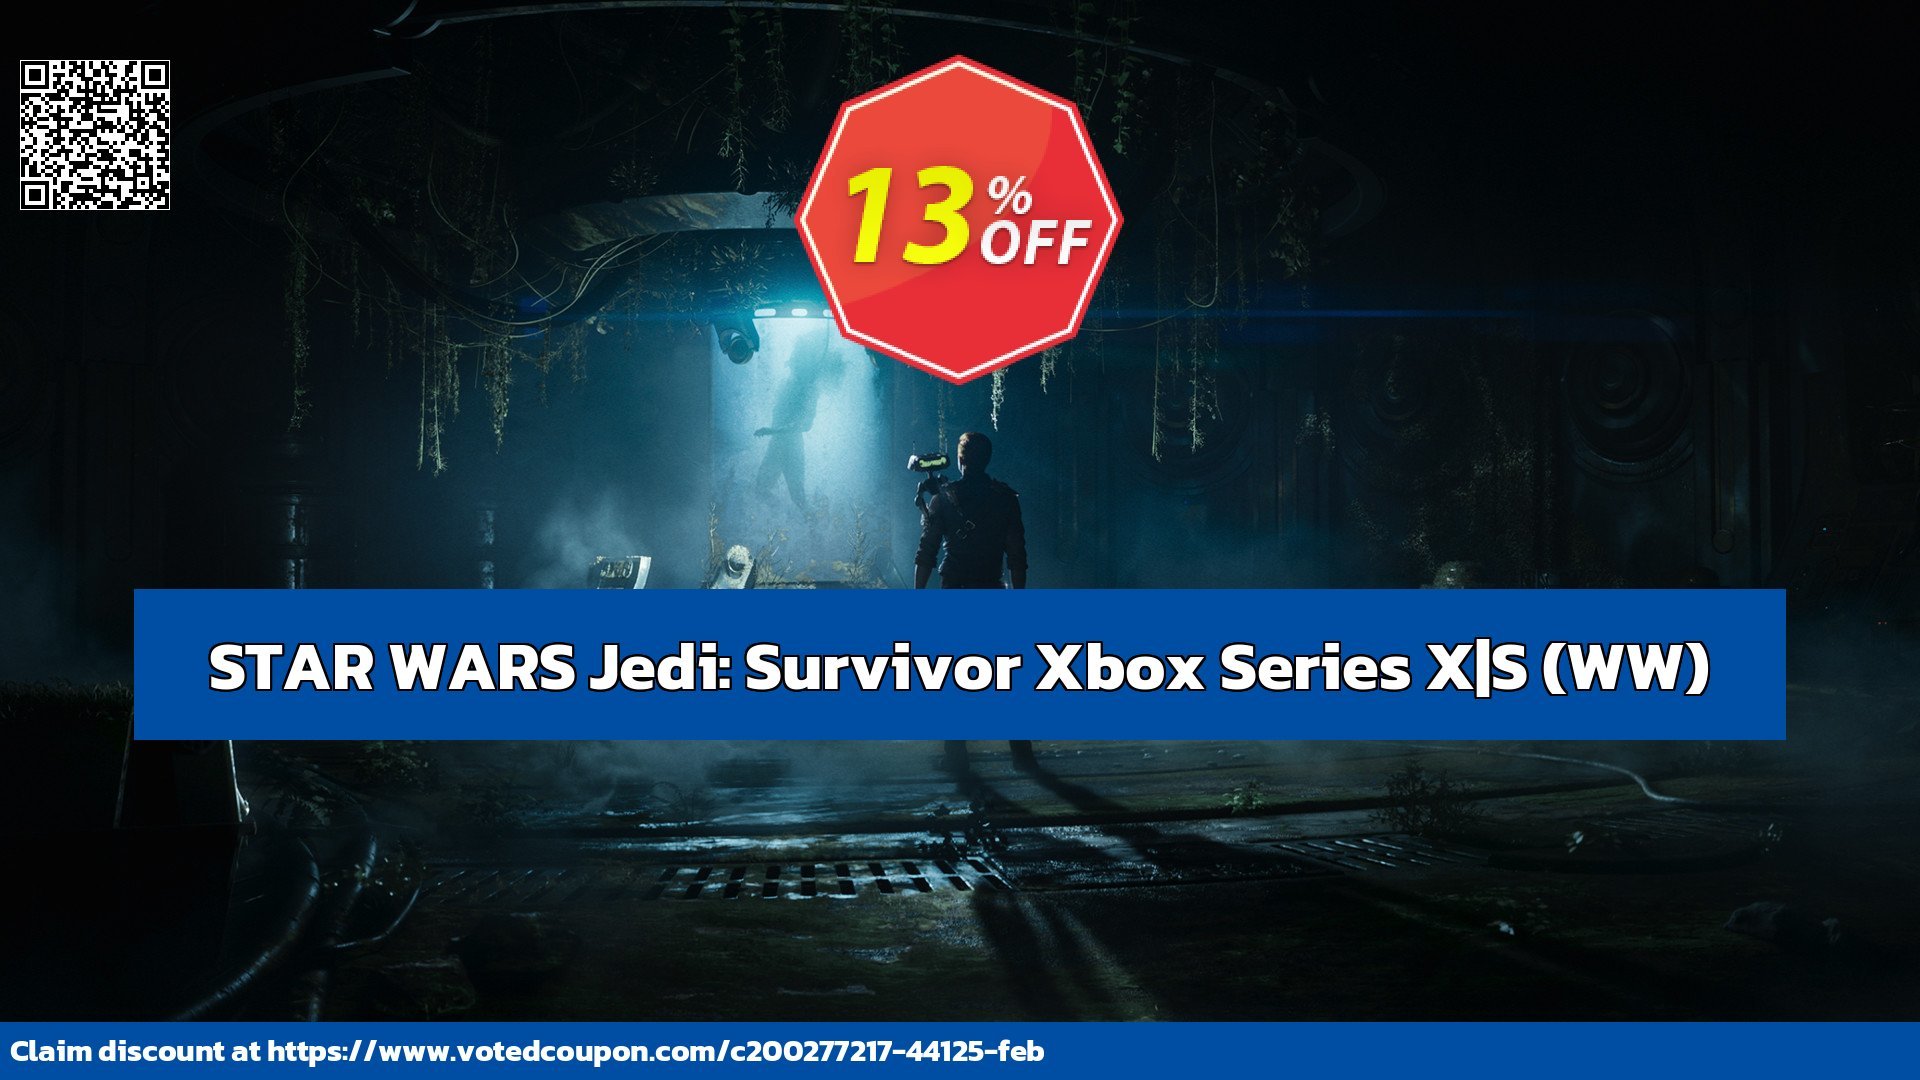 STAR WARS Jedi: Survivor Xbox Series X|S, WW  Coupon, discount STAR WARS Jedi: Survivor Xbox Series X|S (WW) Deal CDkeys. Promotion: STAR WARS Jedi: Survivor Xbox Series X|S (WW) Exclusive Sale offer